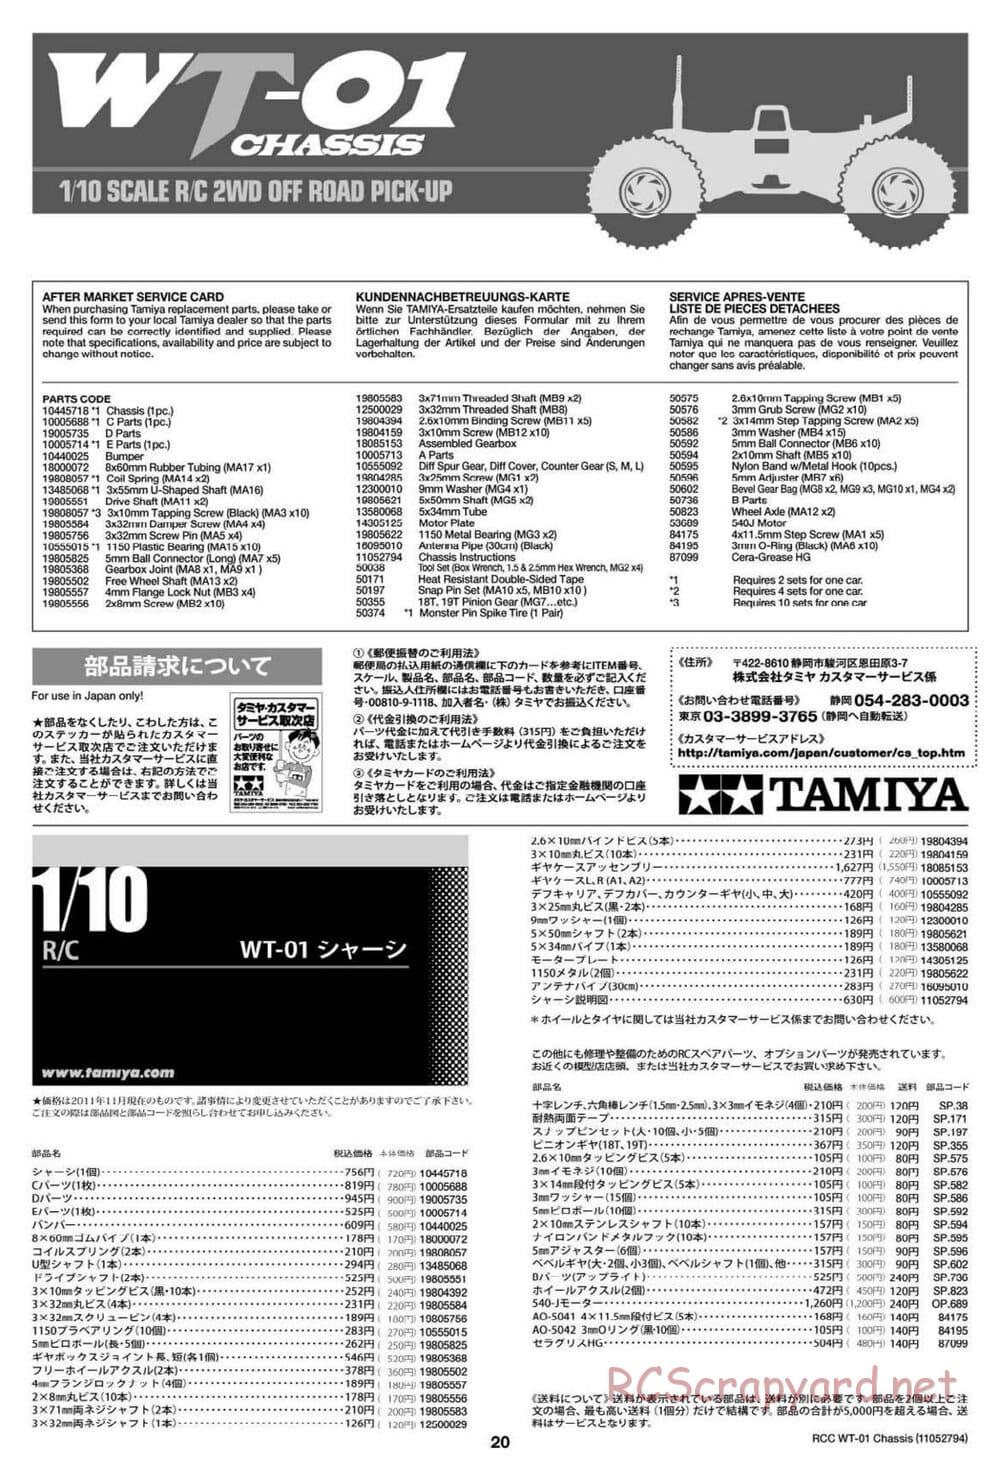 Tamiya - Mud Blaster II - WT-01 Chassis - Manual - Page 20